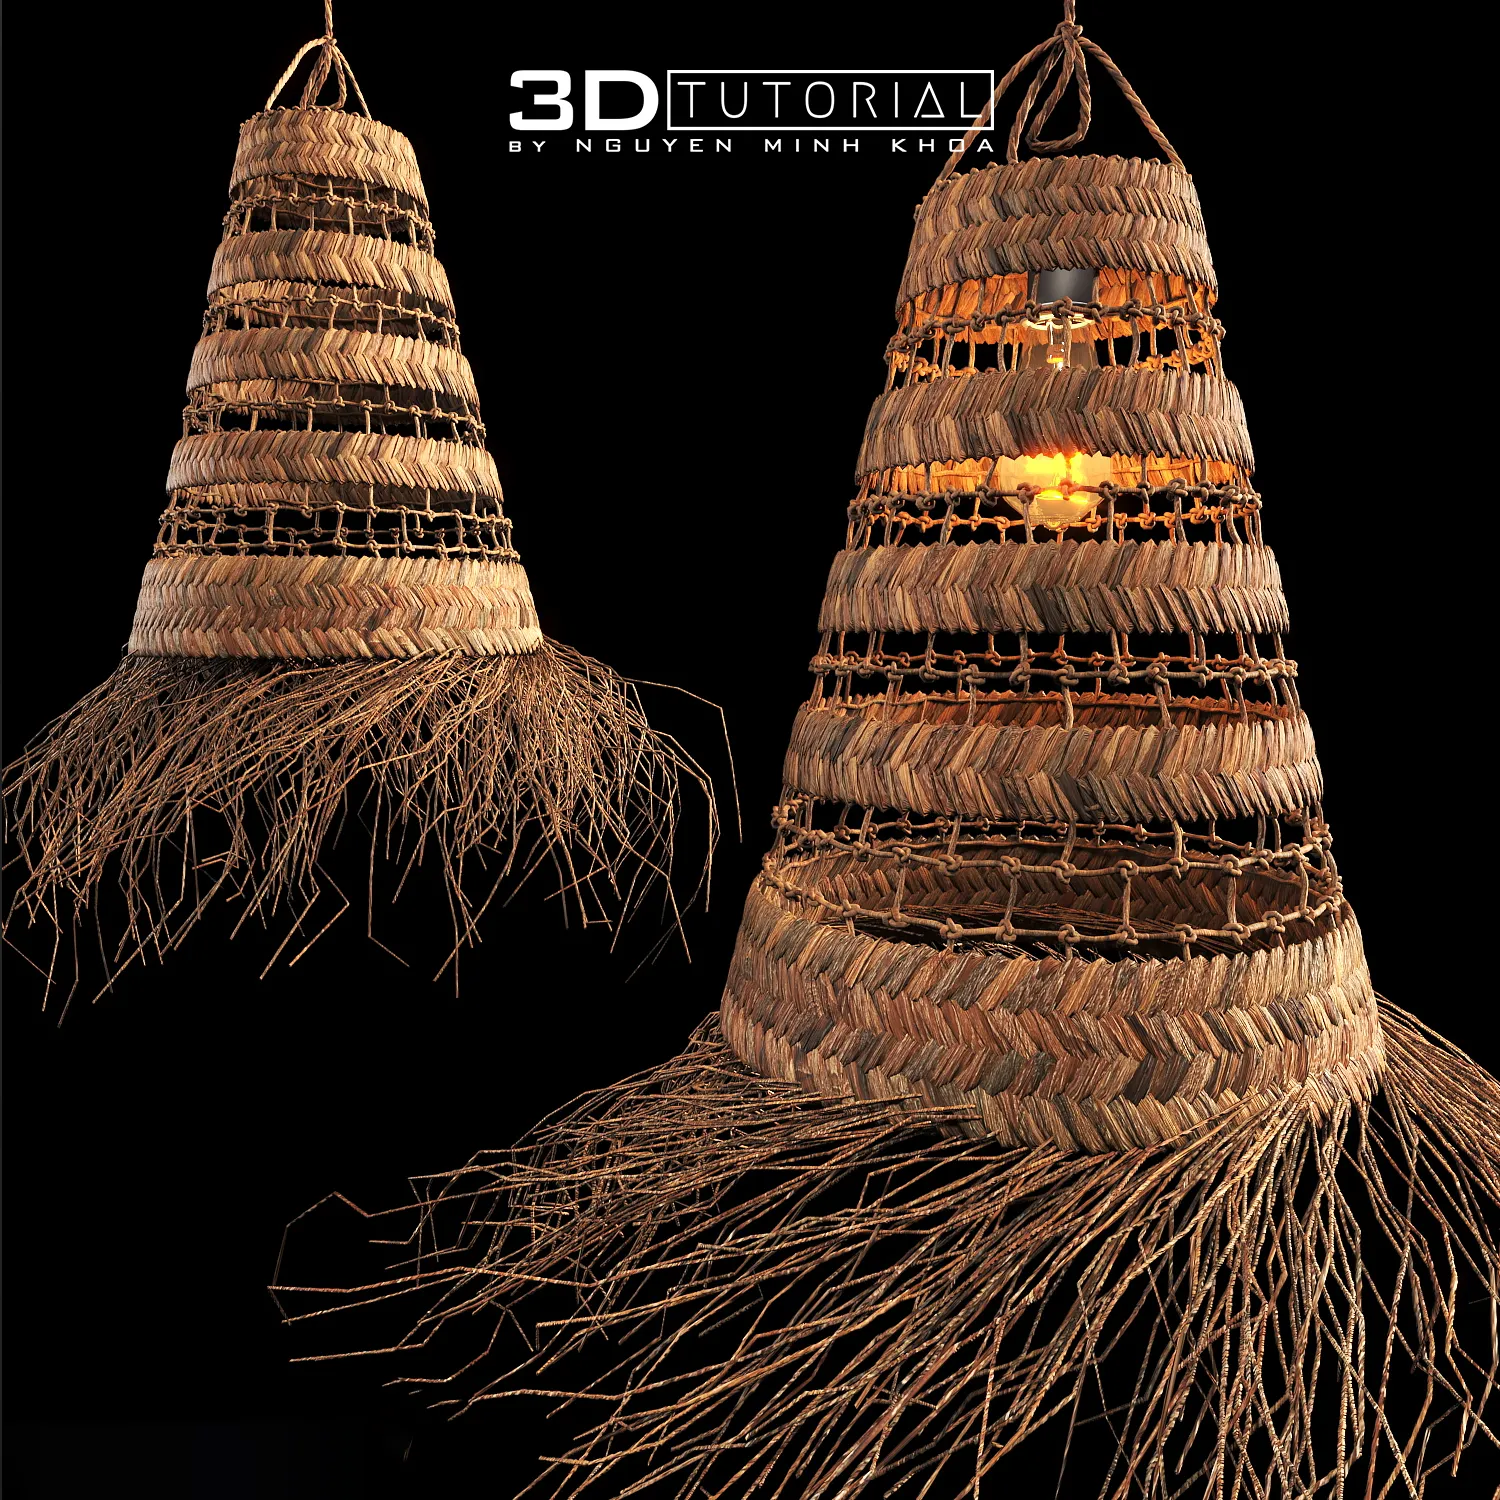 FURNITURE 3D MODELS – Livv Lifestyle Essaouira seagrass lamp model byNguyenMinhKhoa